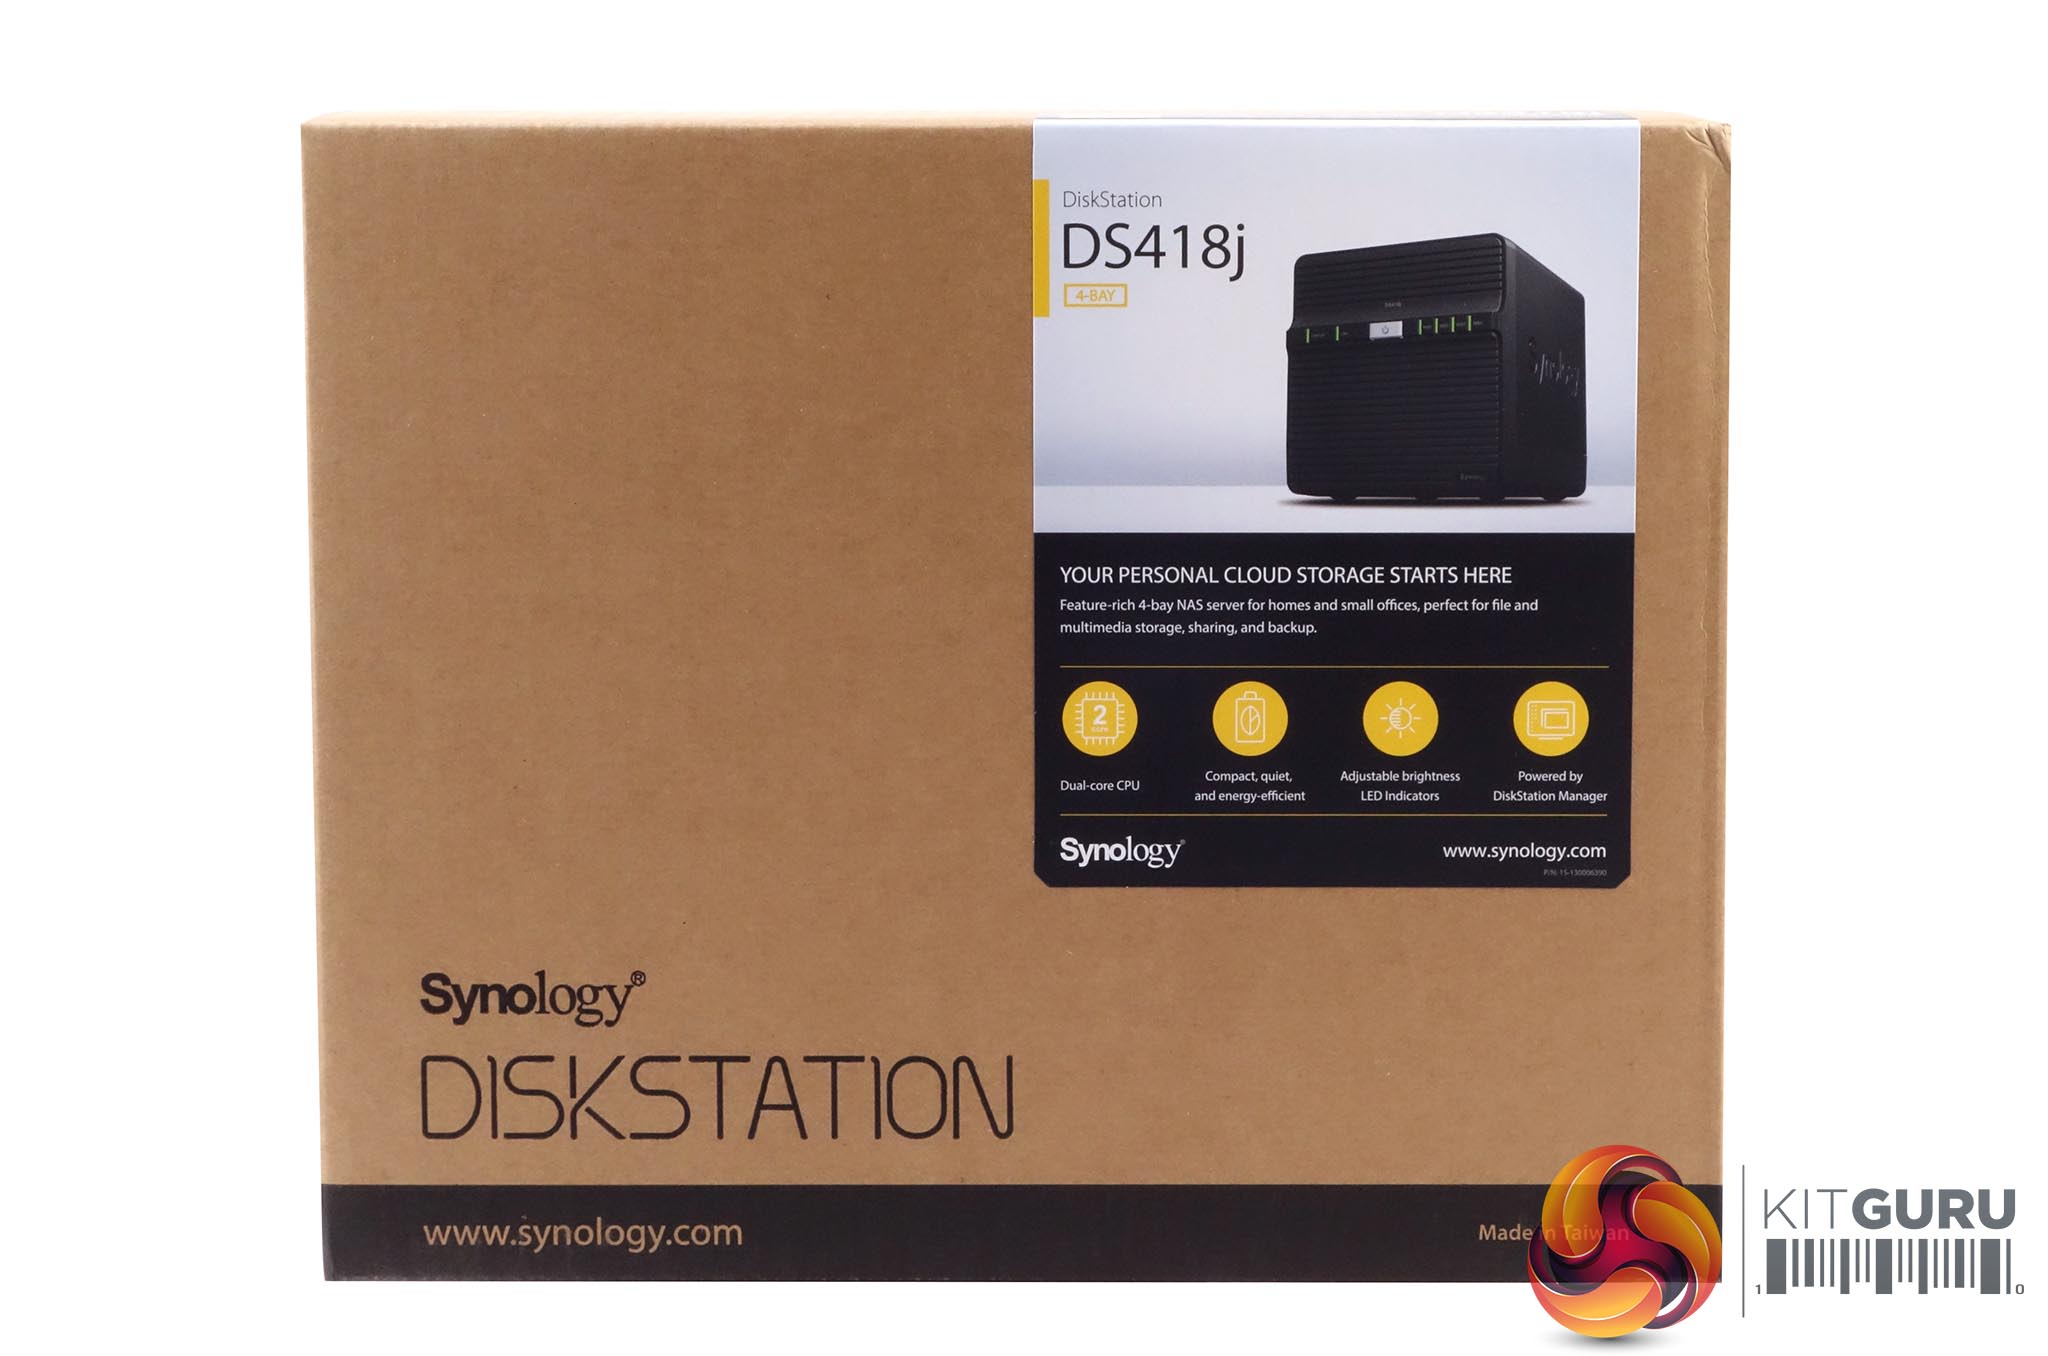 Synology DiskStation DS418j Review | KitGuru- Part 2